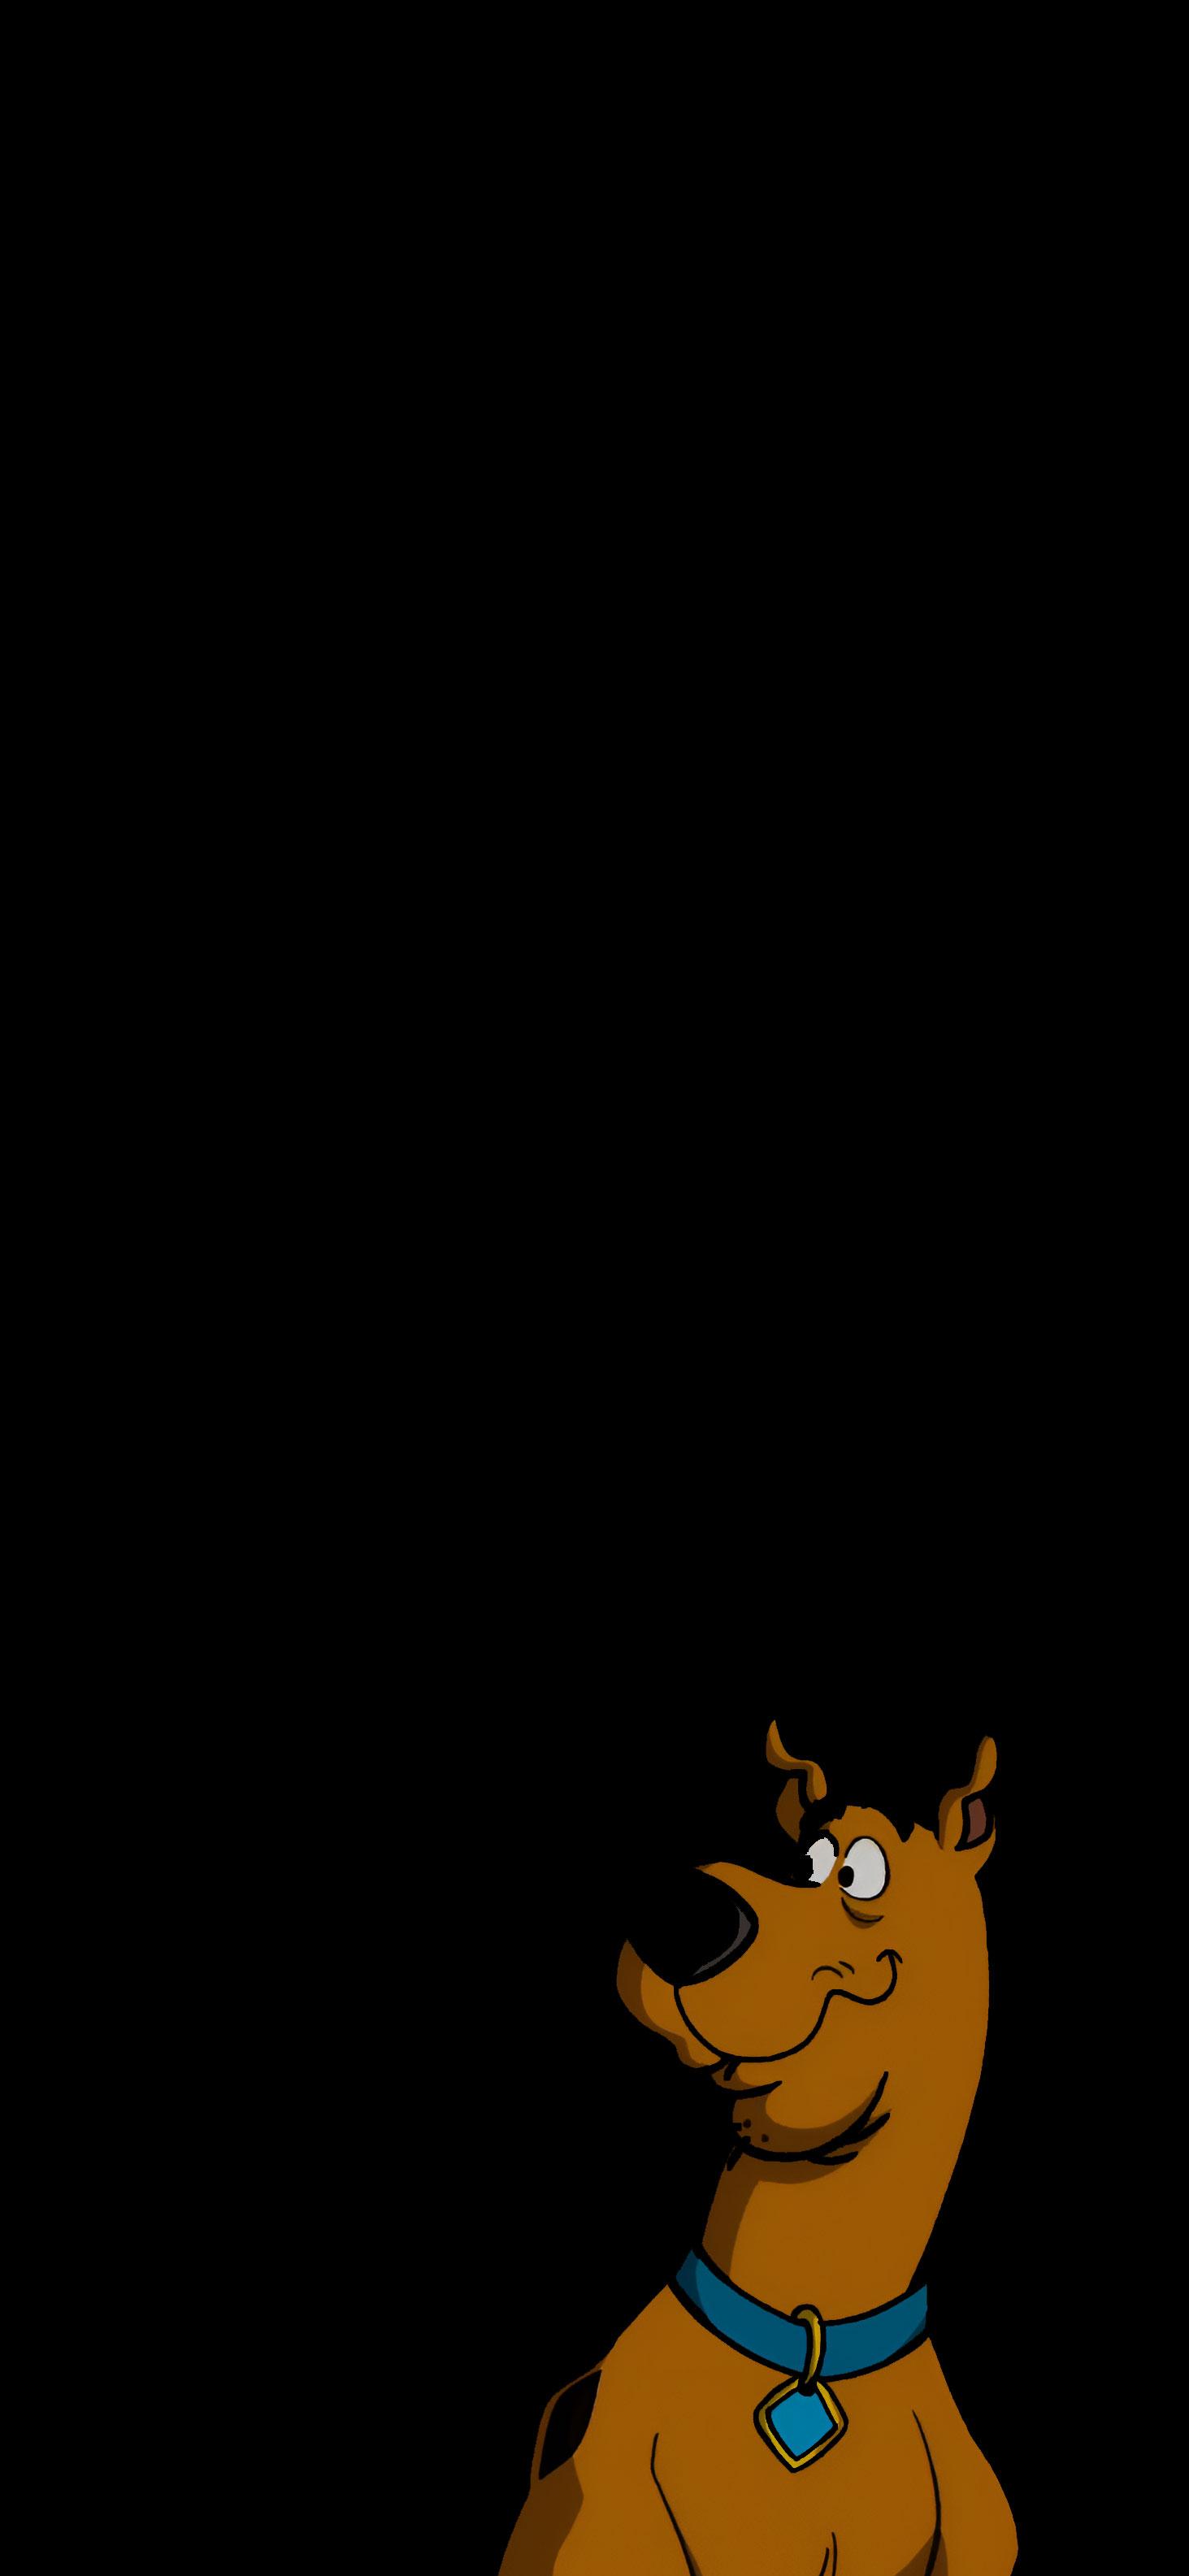 Cool Scooby Doo Black Background Wallpaper Cartoon